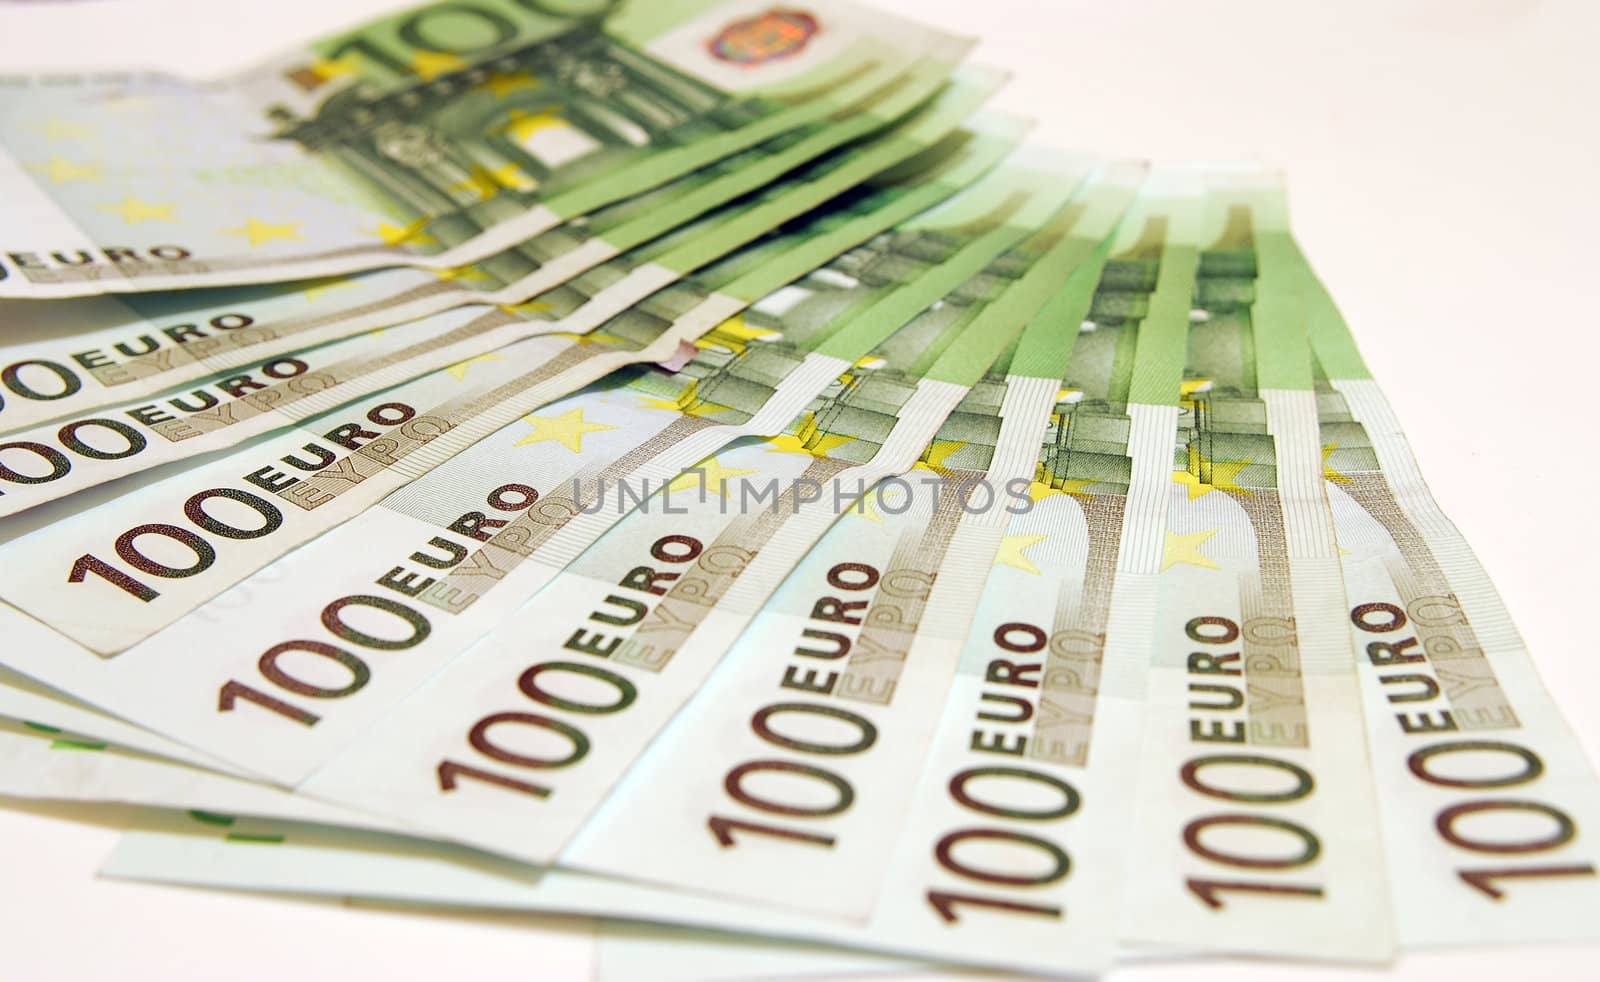 100 Euro notes on a white background.
